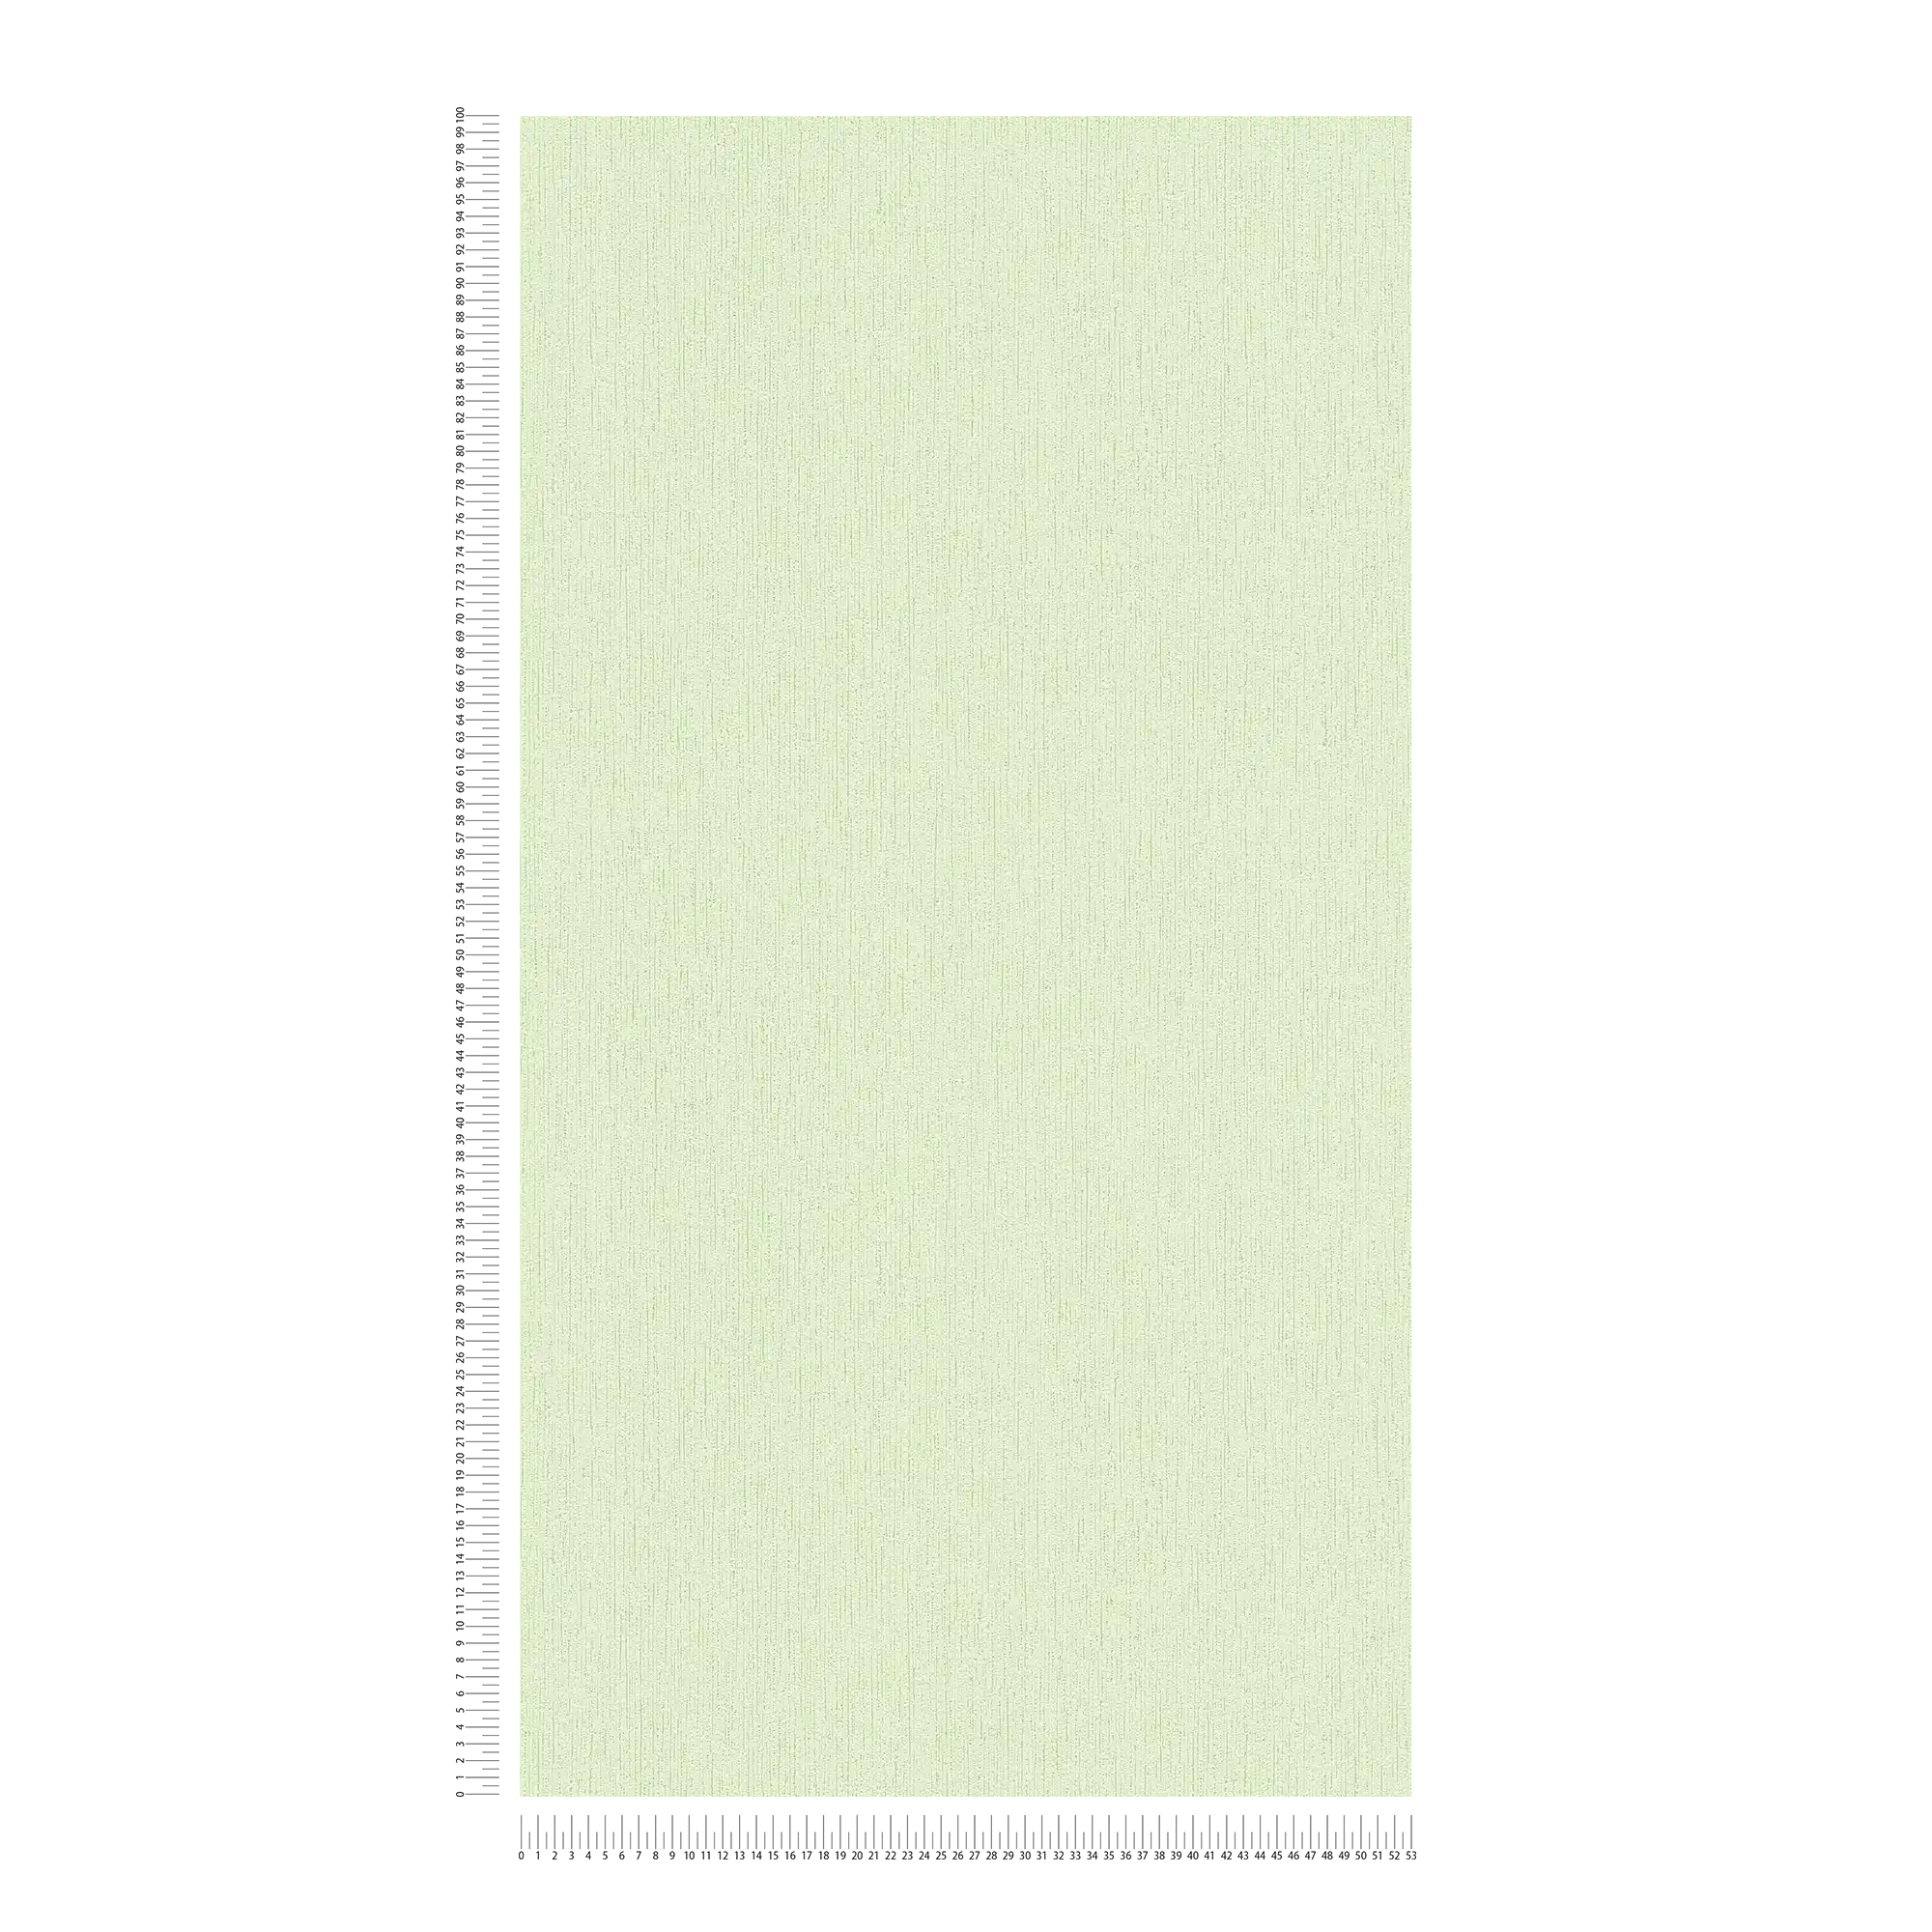             Hellgrüne Tapete Putzoptik & Strukturoberfläche - Grün
        